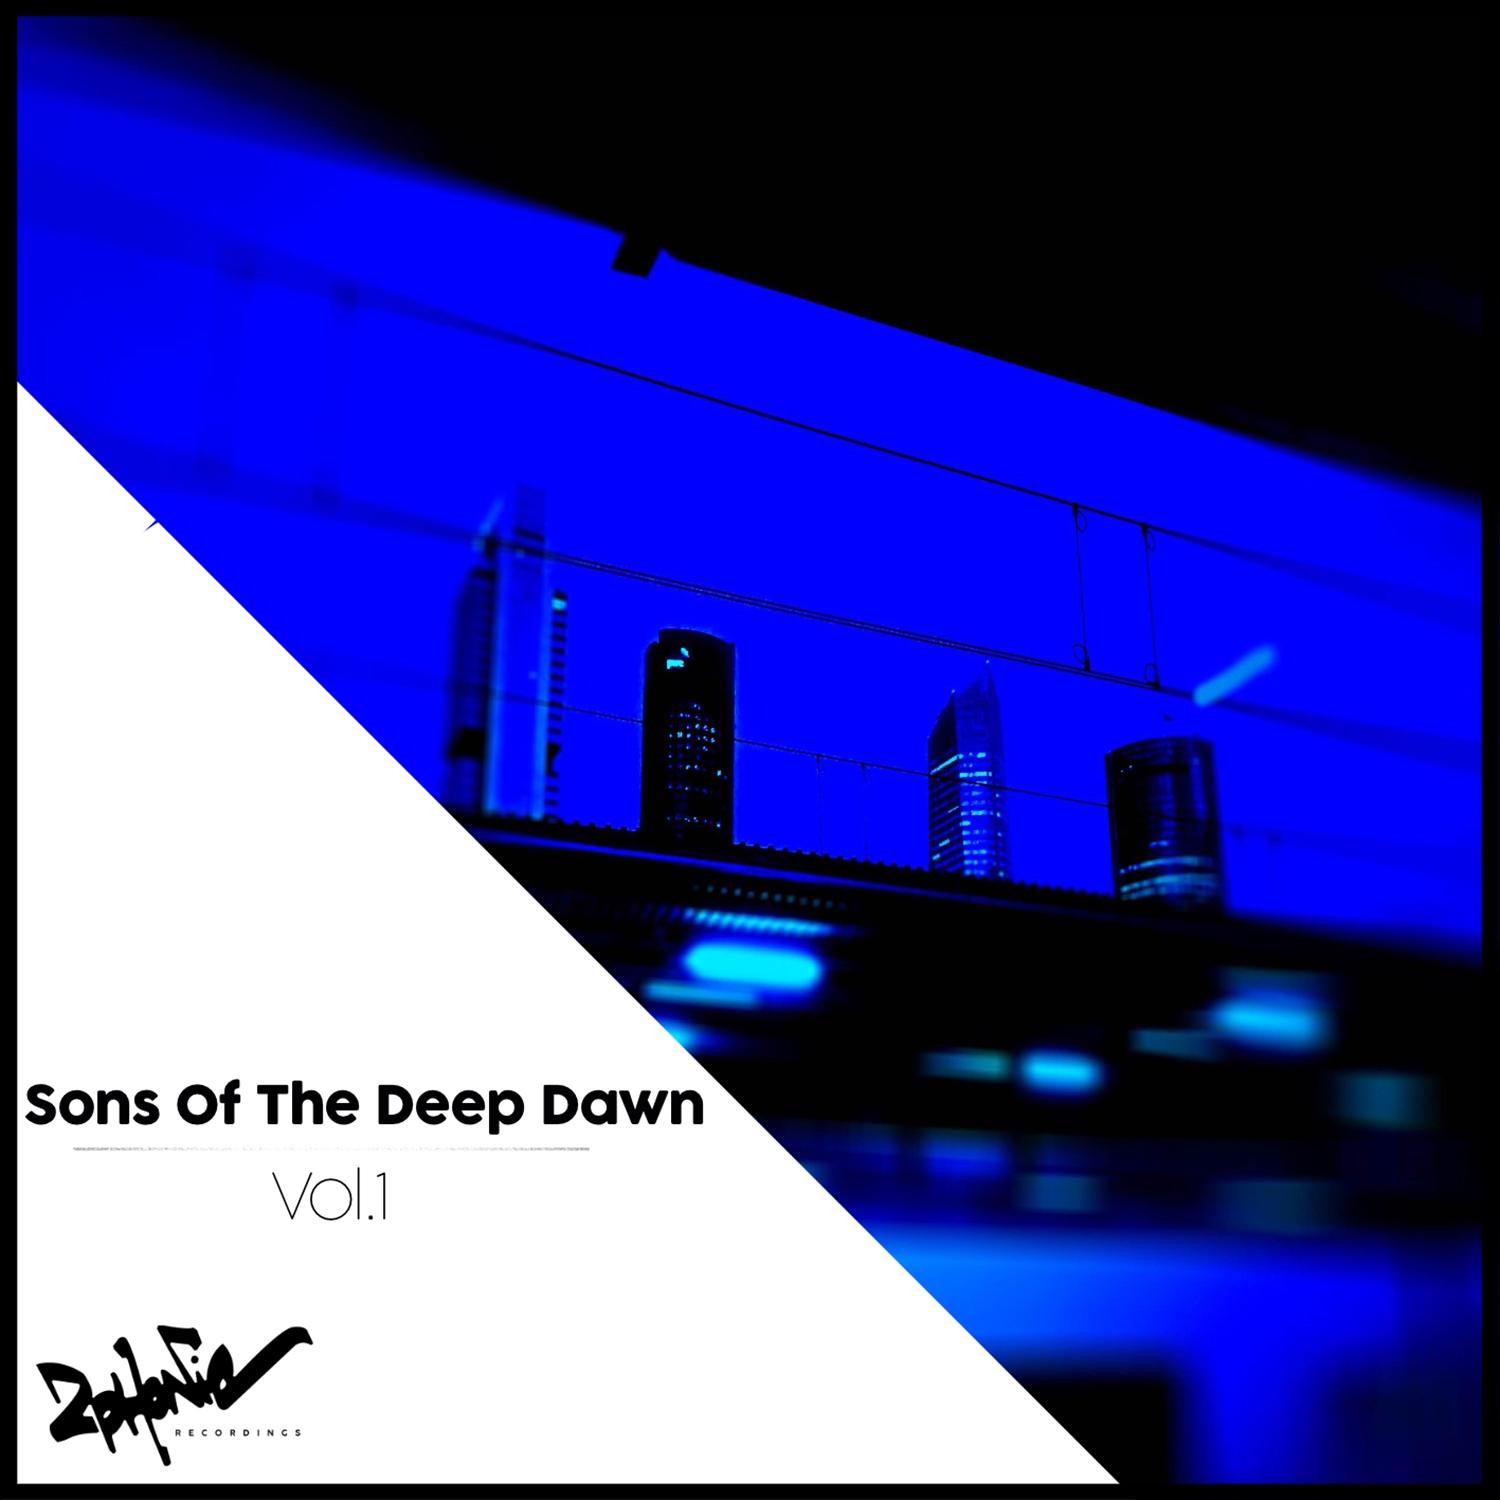 Sons of the Deep Dawn, Vol. 1